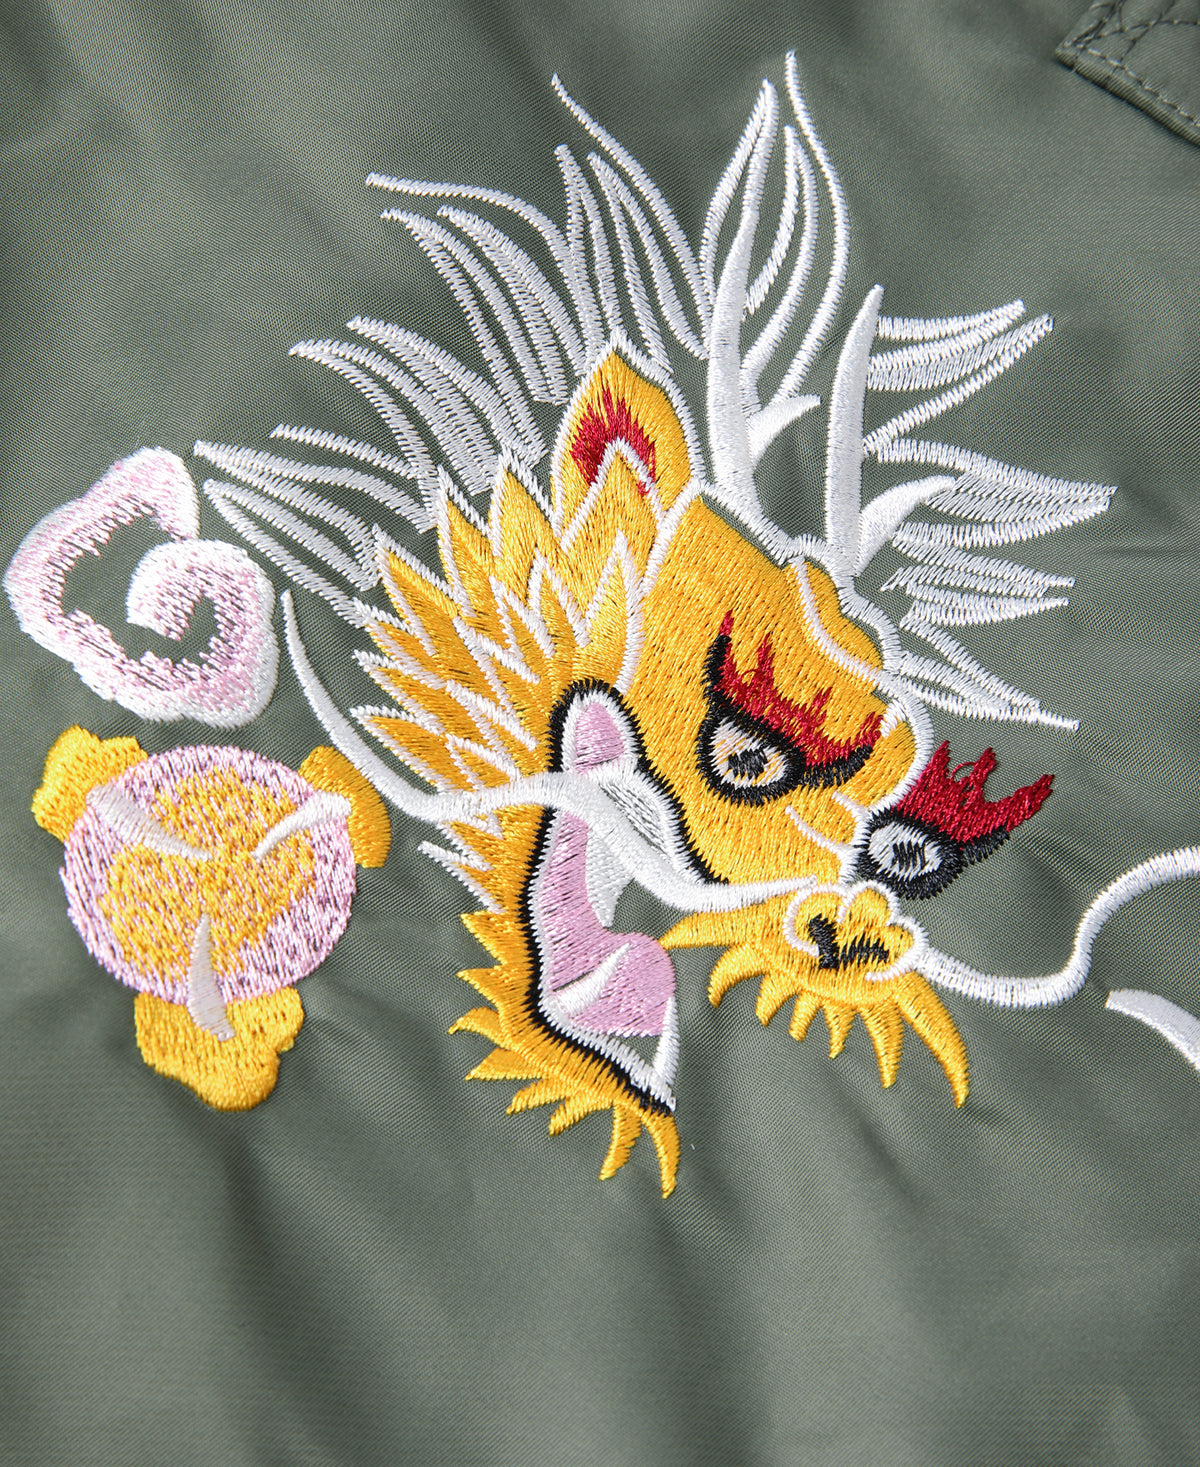 Dragon × Tiger Embroidery Flyers Helmet Bag